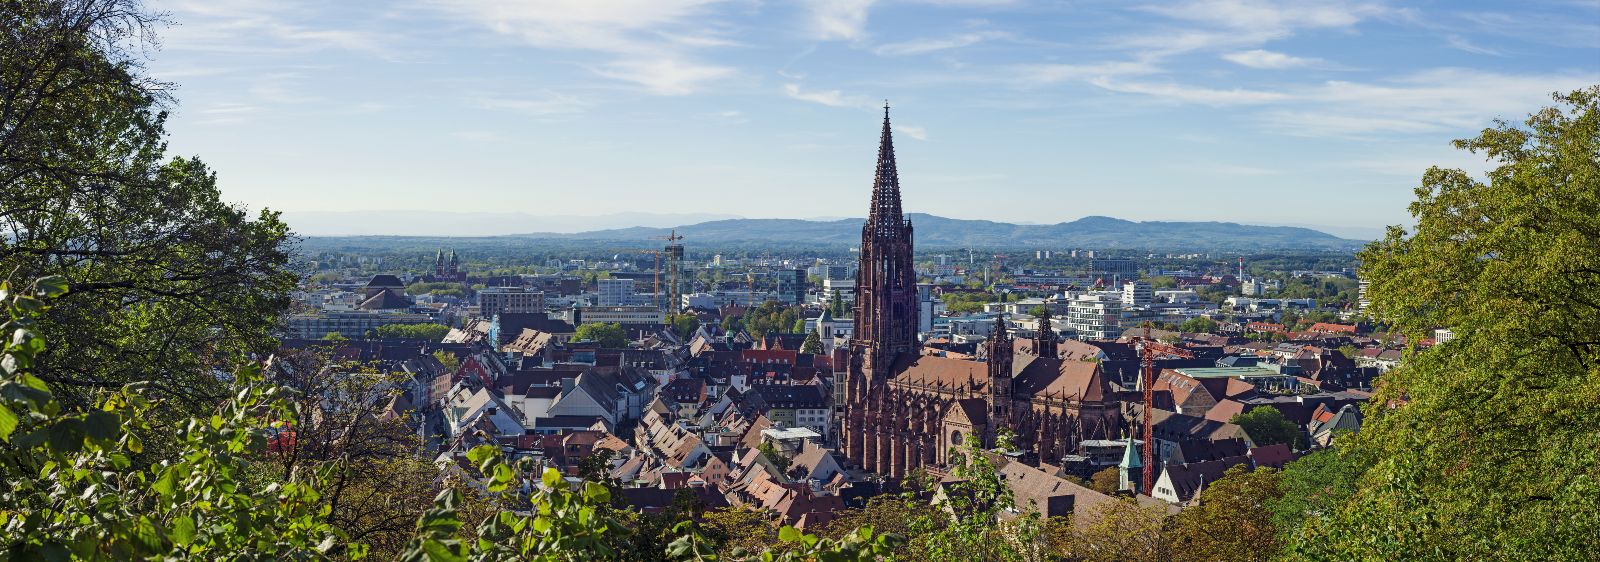 Panoramablick über die Stadt Freiburg